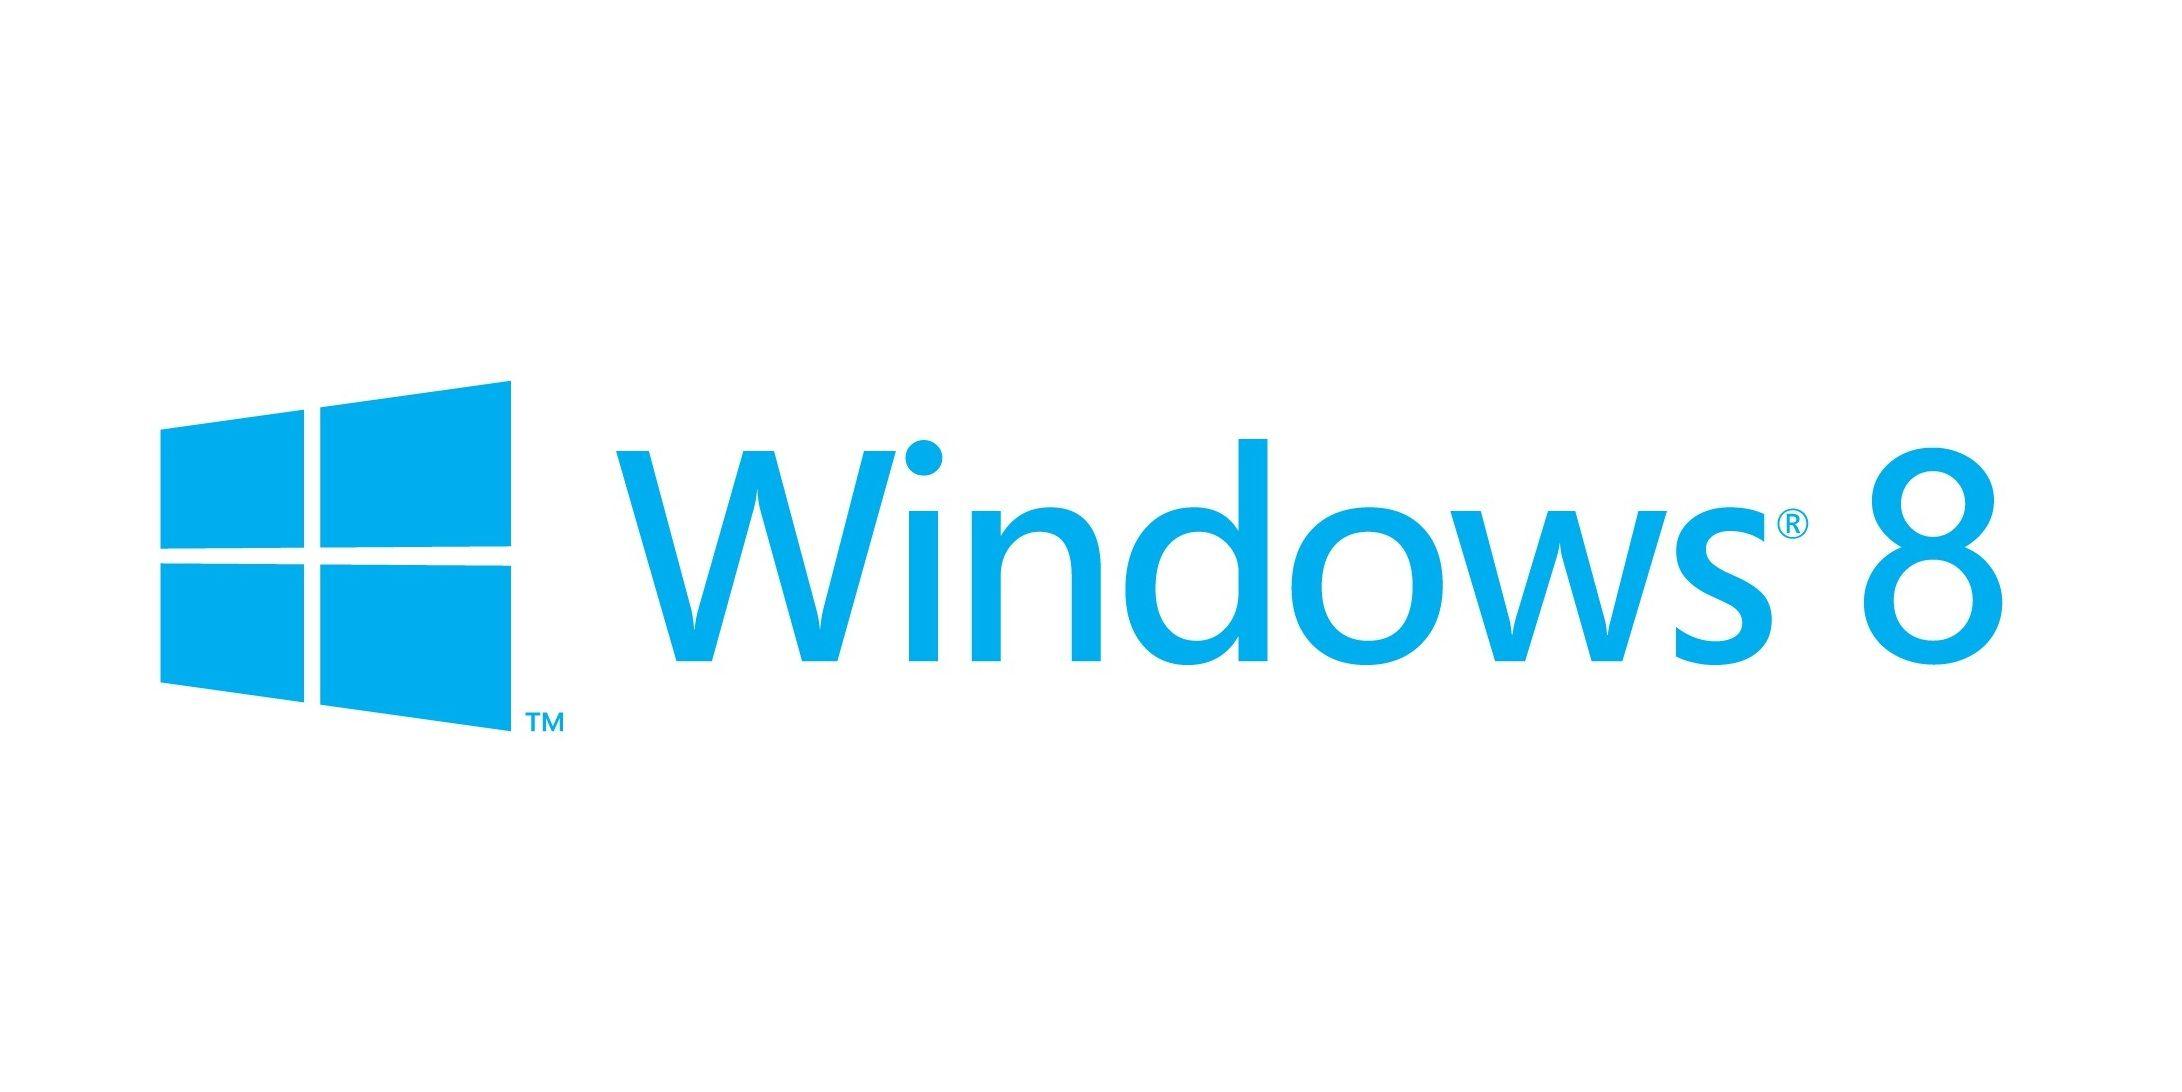 Windows 8 Logo HD Wallpaper of Windows